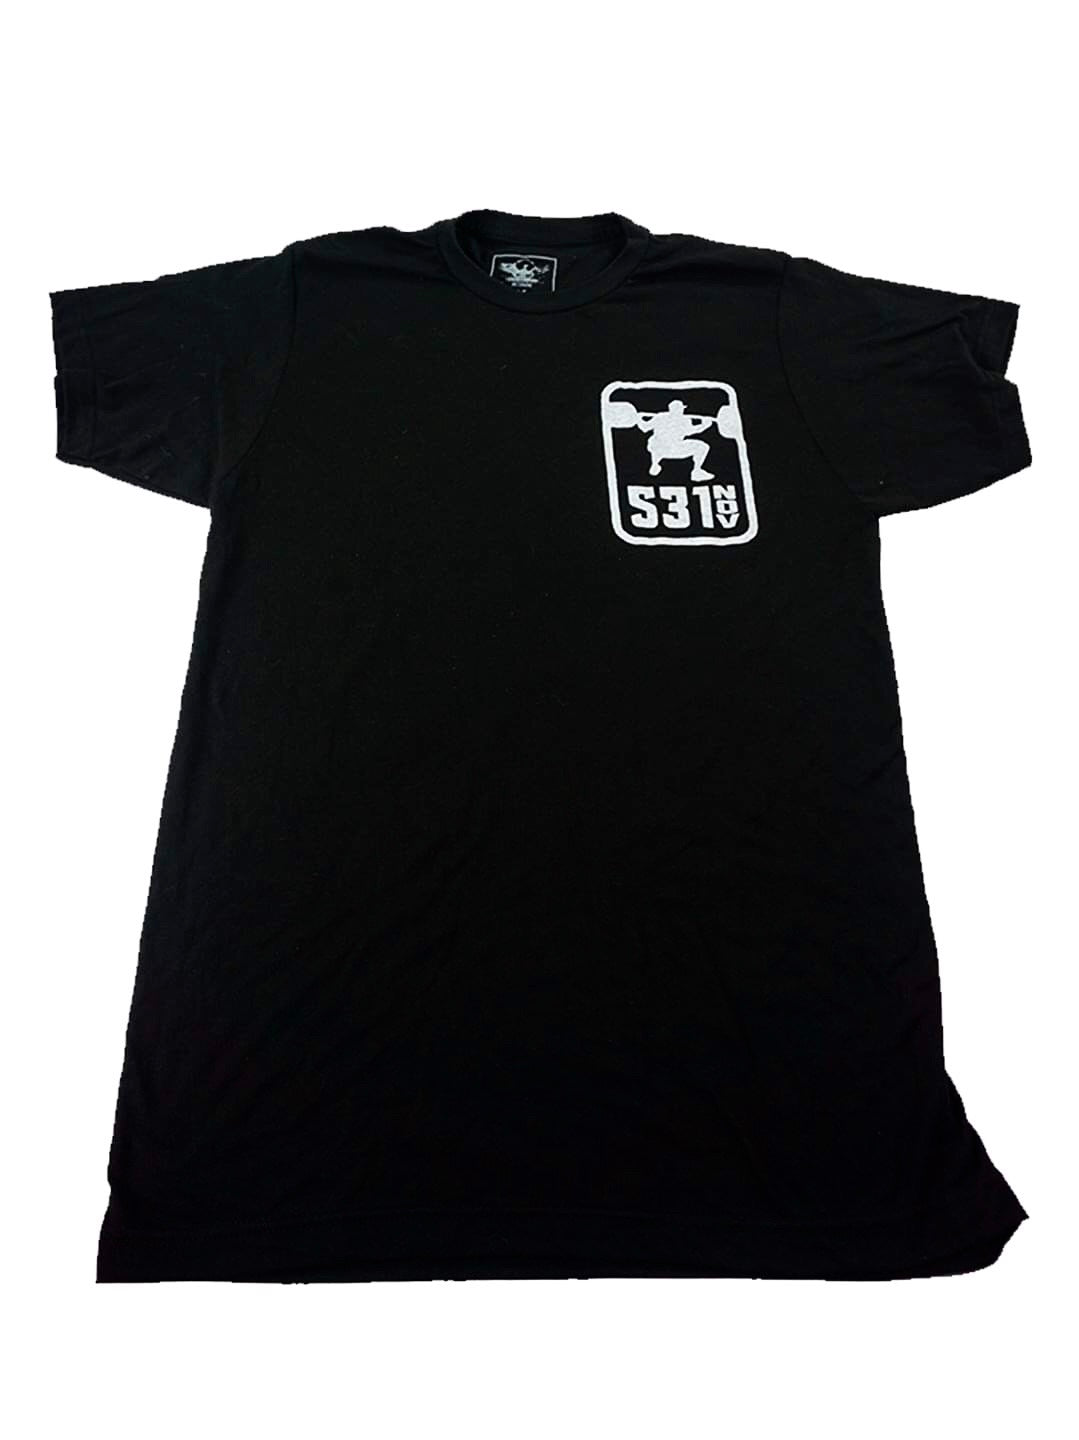 Squat Shirt - Black